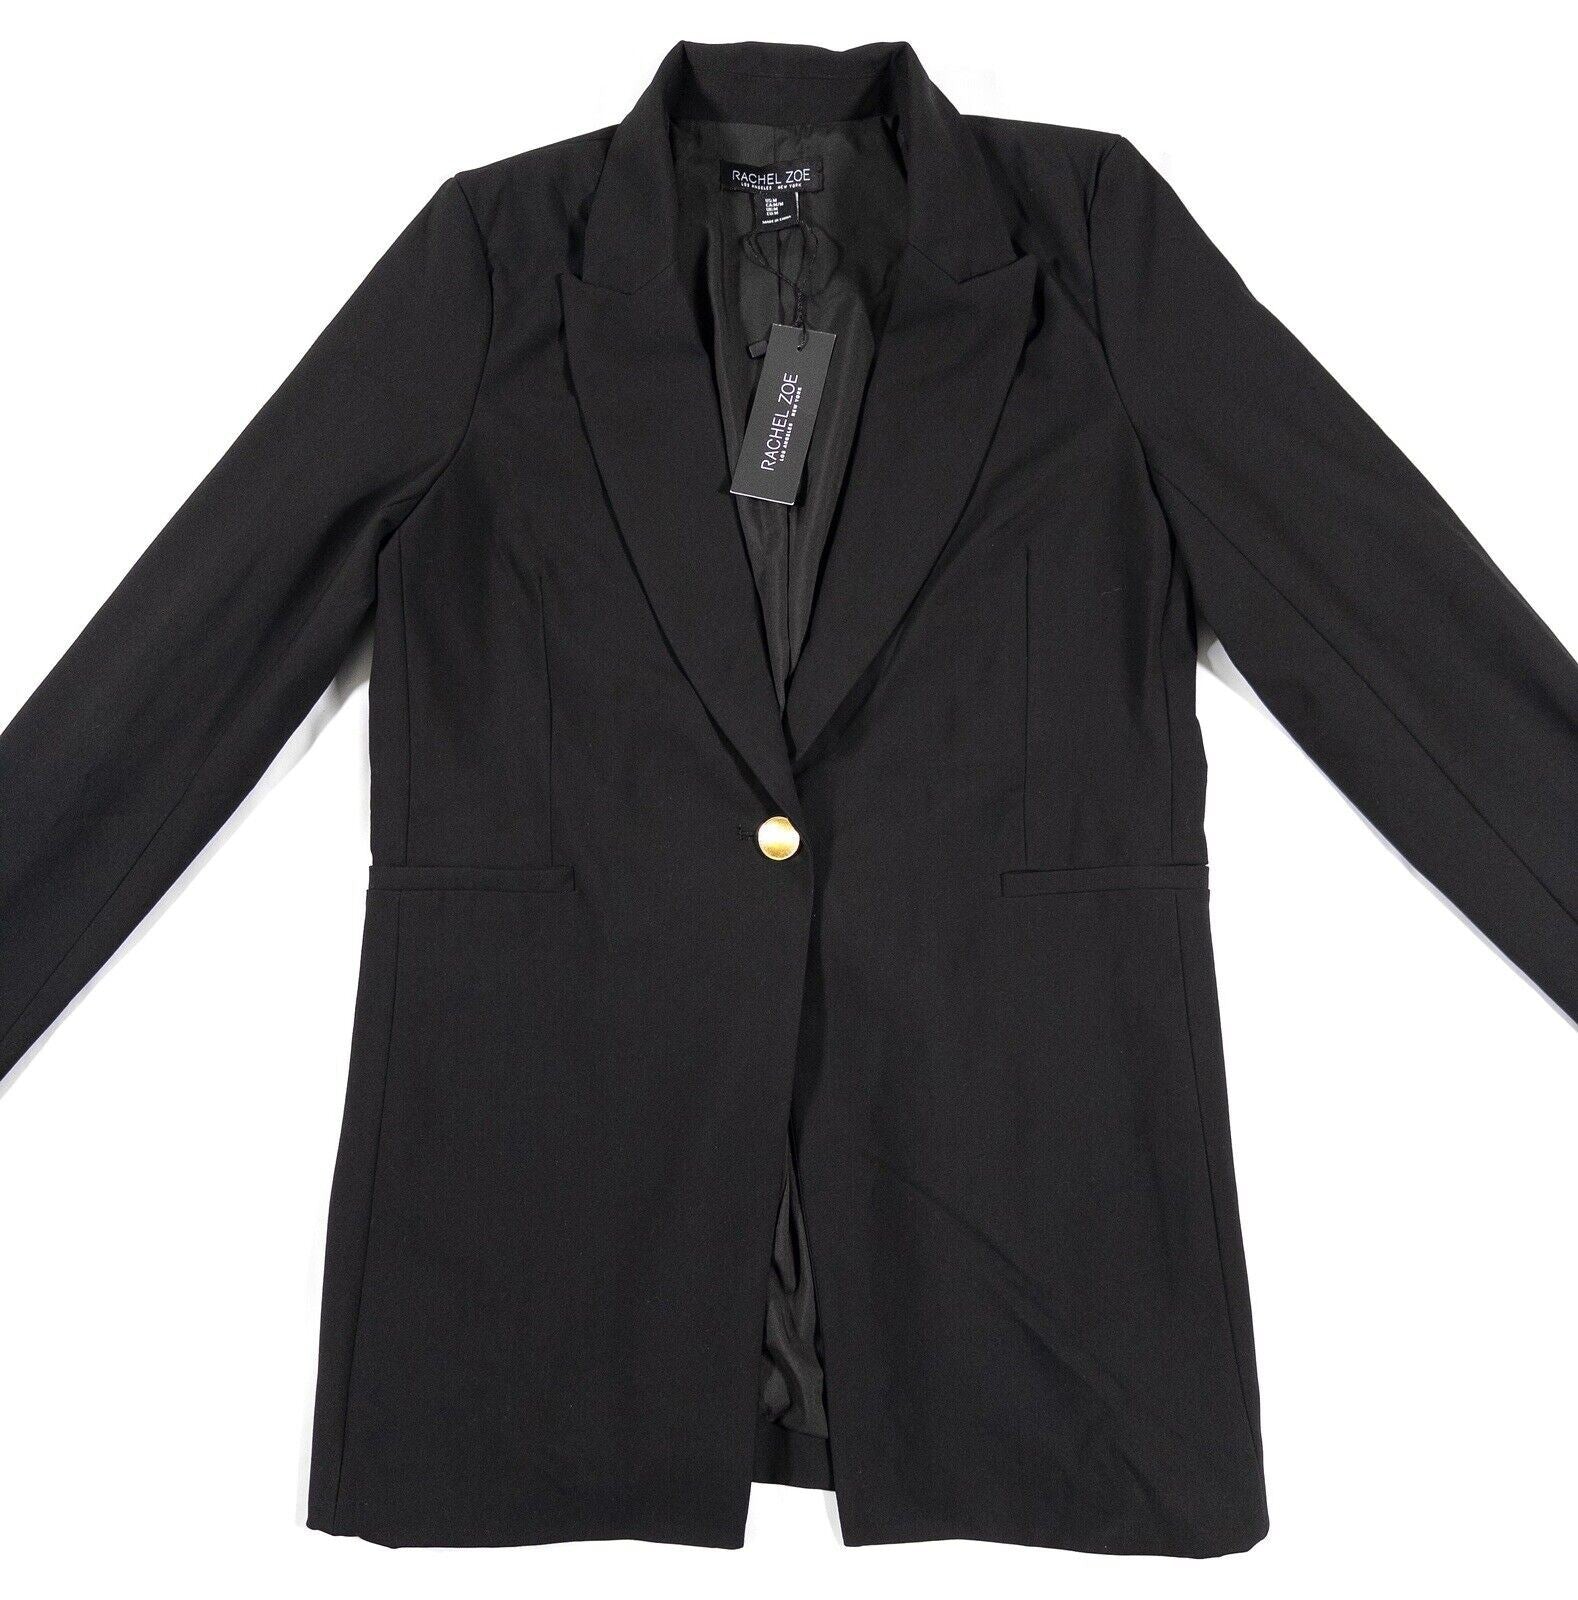 RACHEL ZOE Women's Blazer Jacket Long Black Size UK Medium